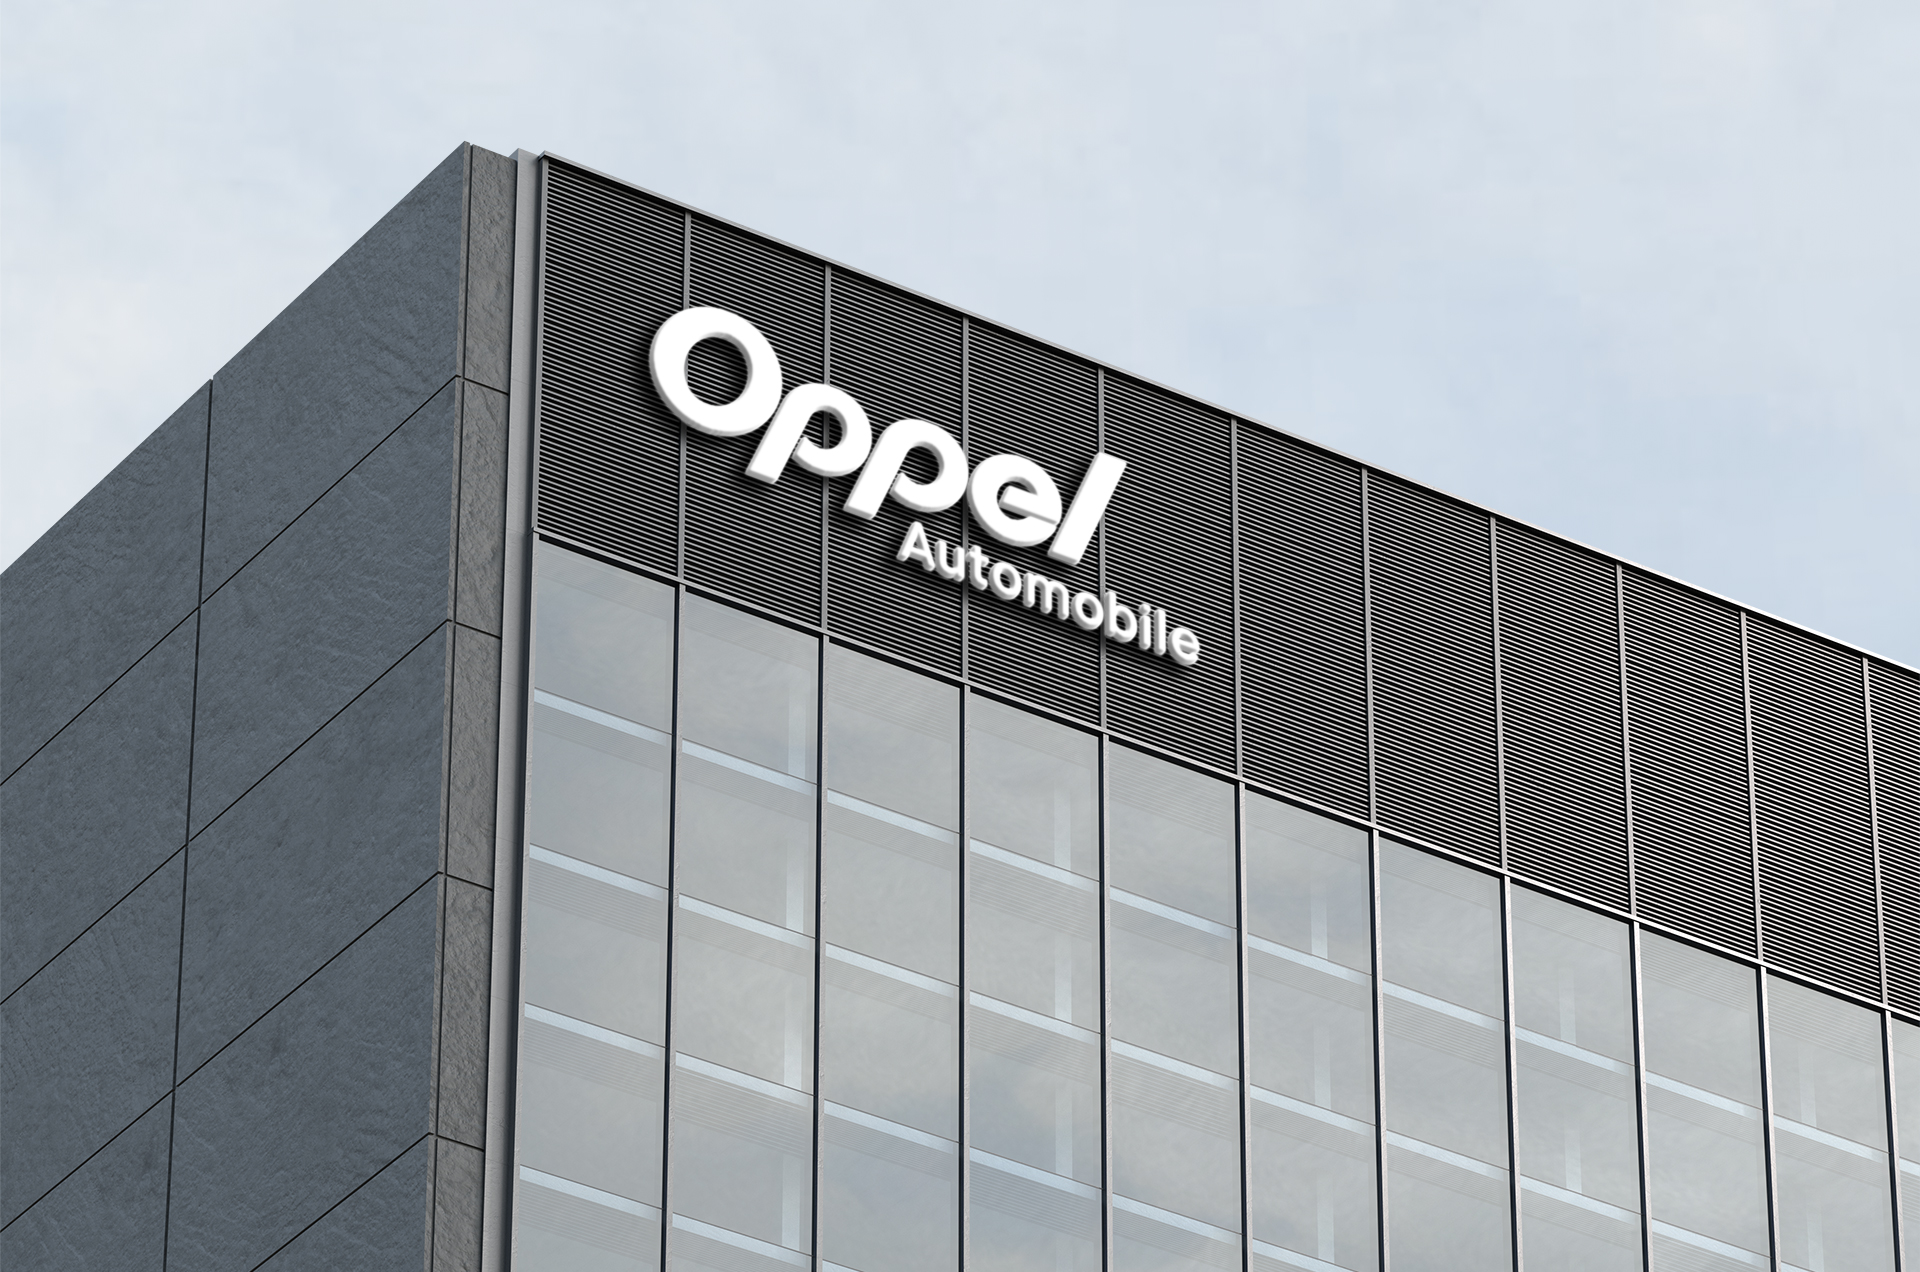 Oppel Automobile – Corporate Design Autohaus, Firmenschild